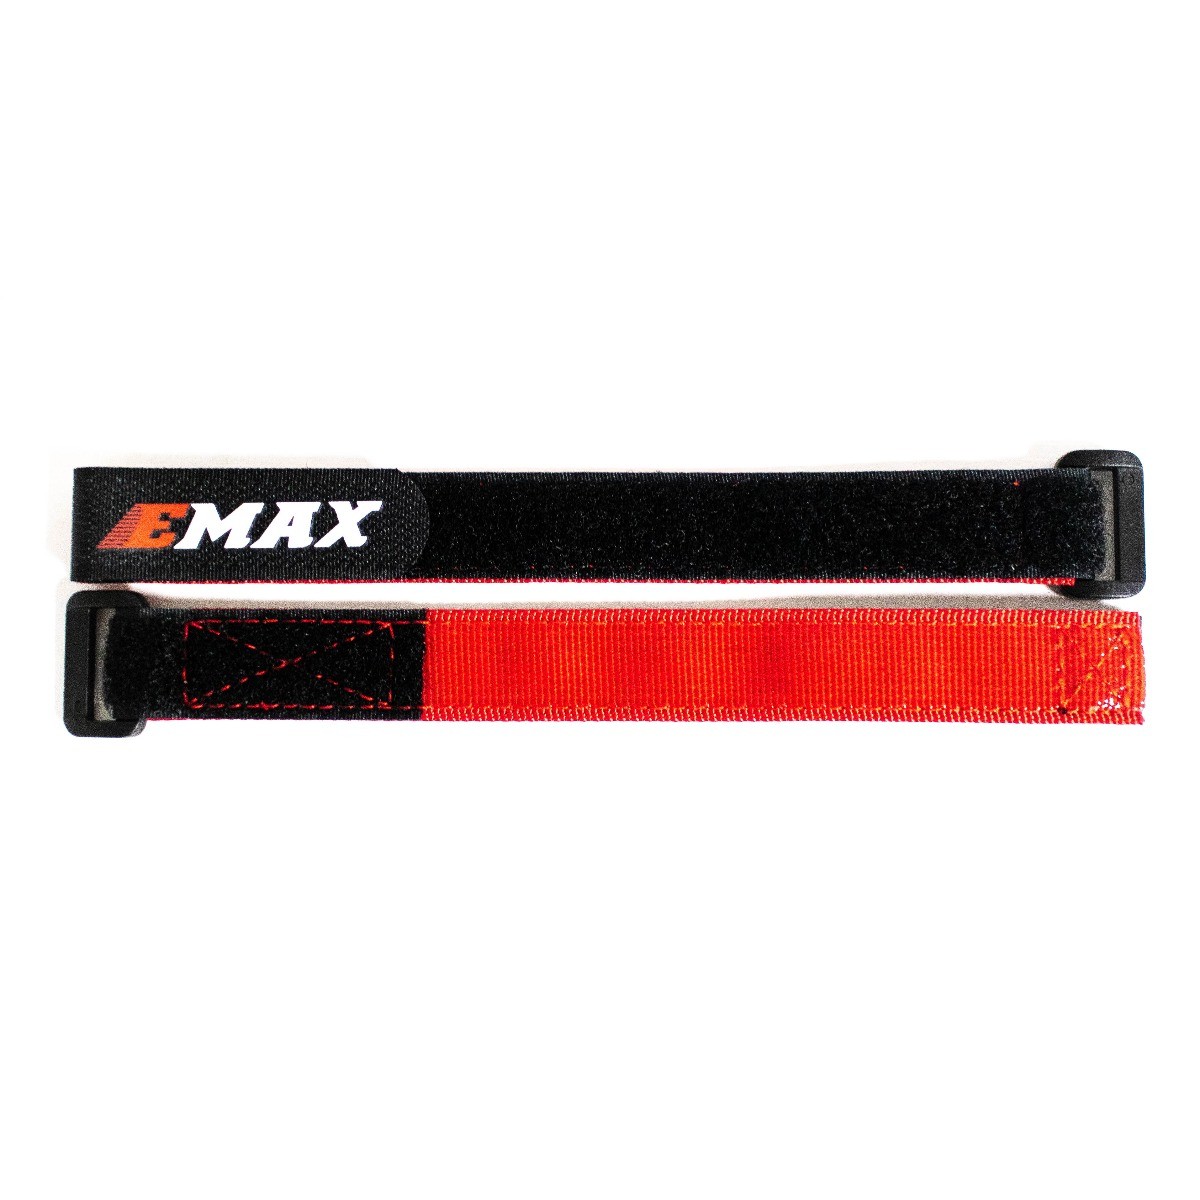 EMAX branded LiPo Battery Strap 260mm Nylon Rubber coating for 4